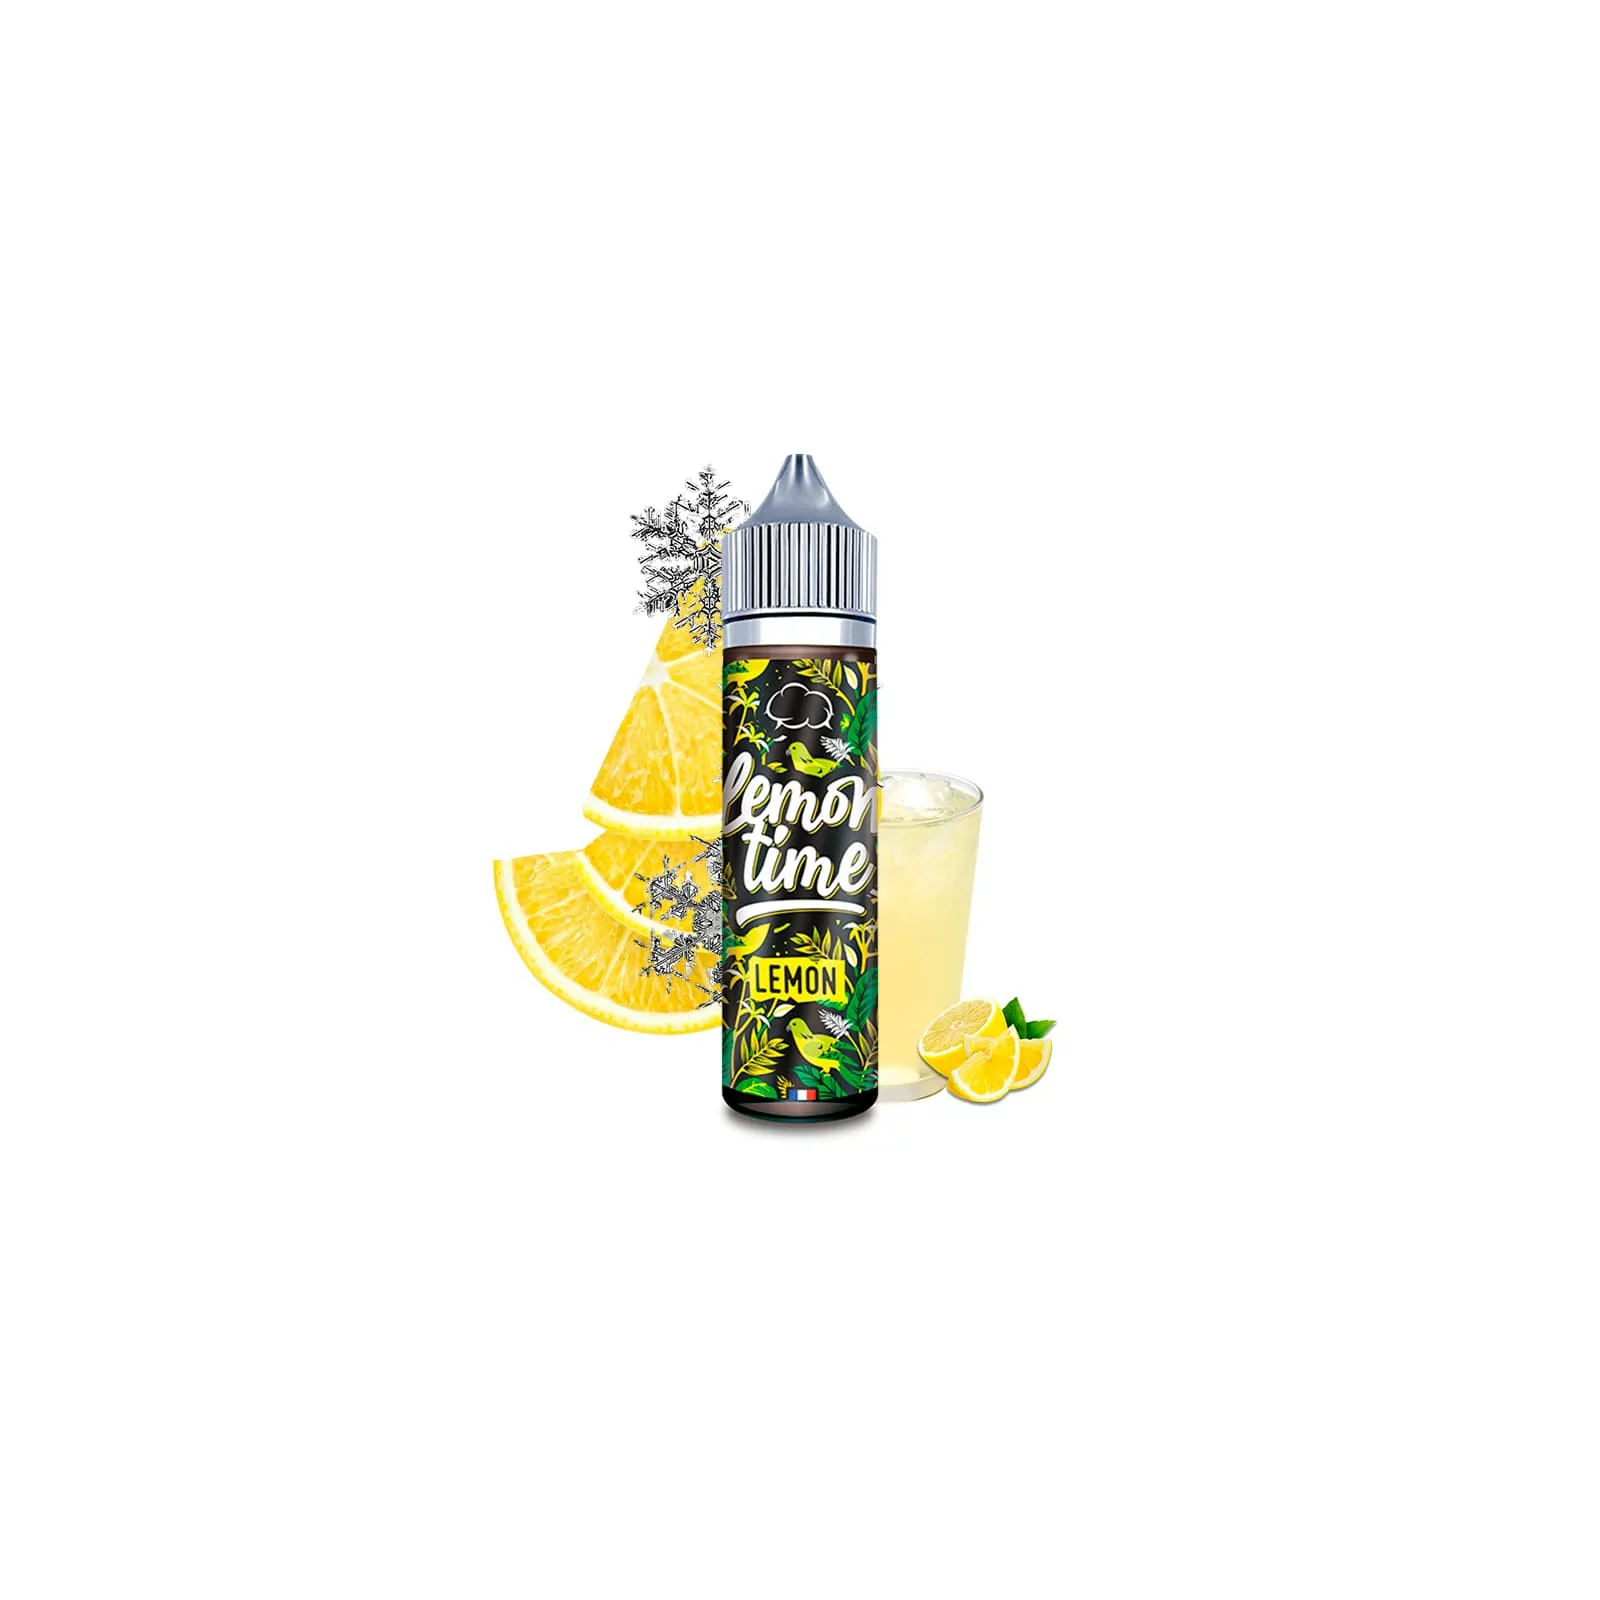 Lemon 50 ml - Lemon Time